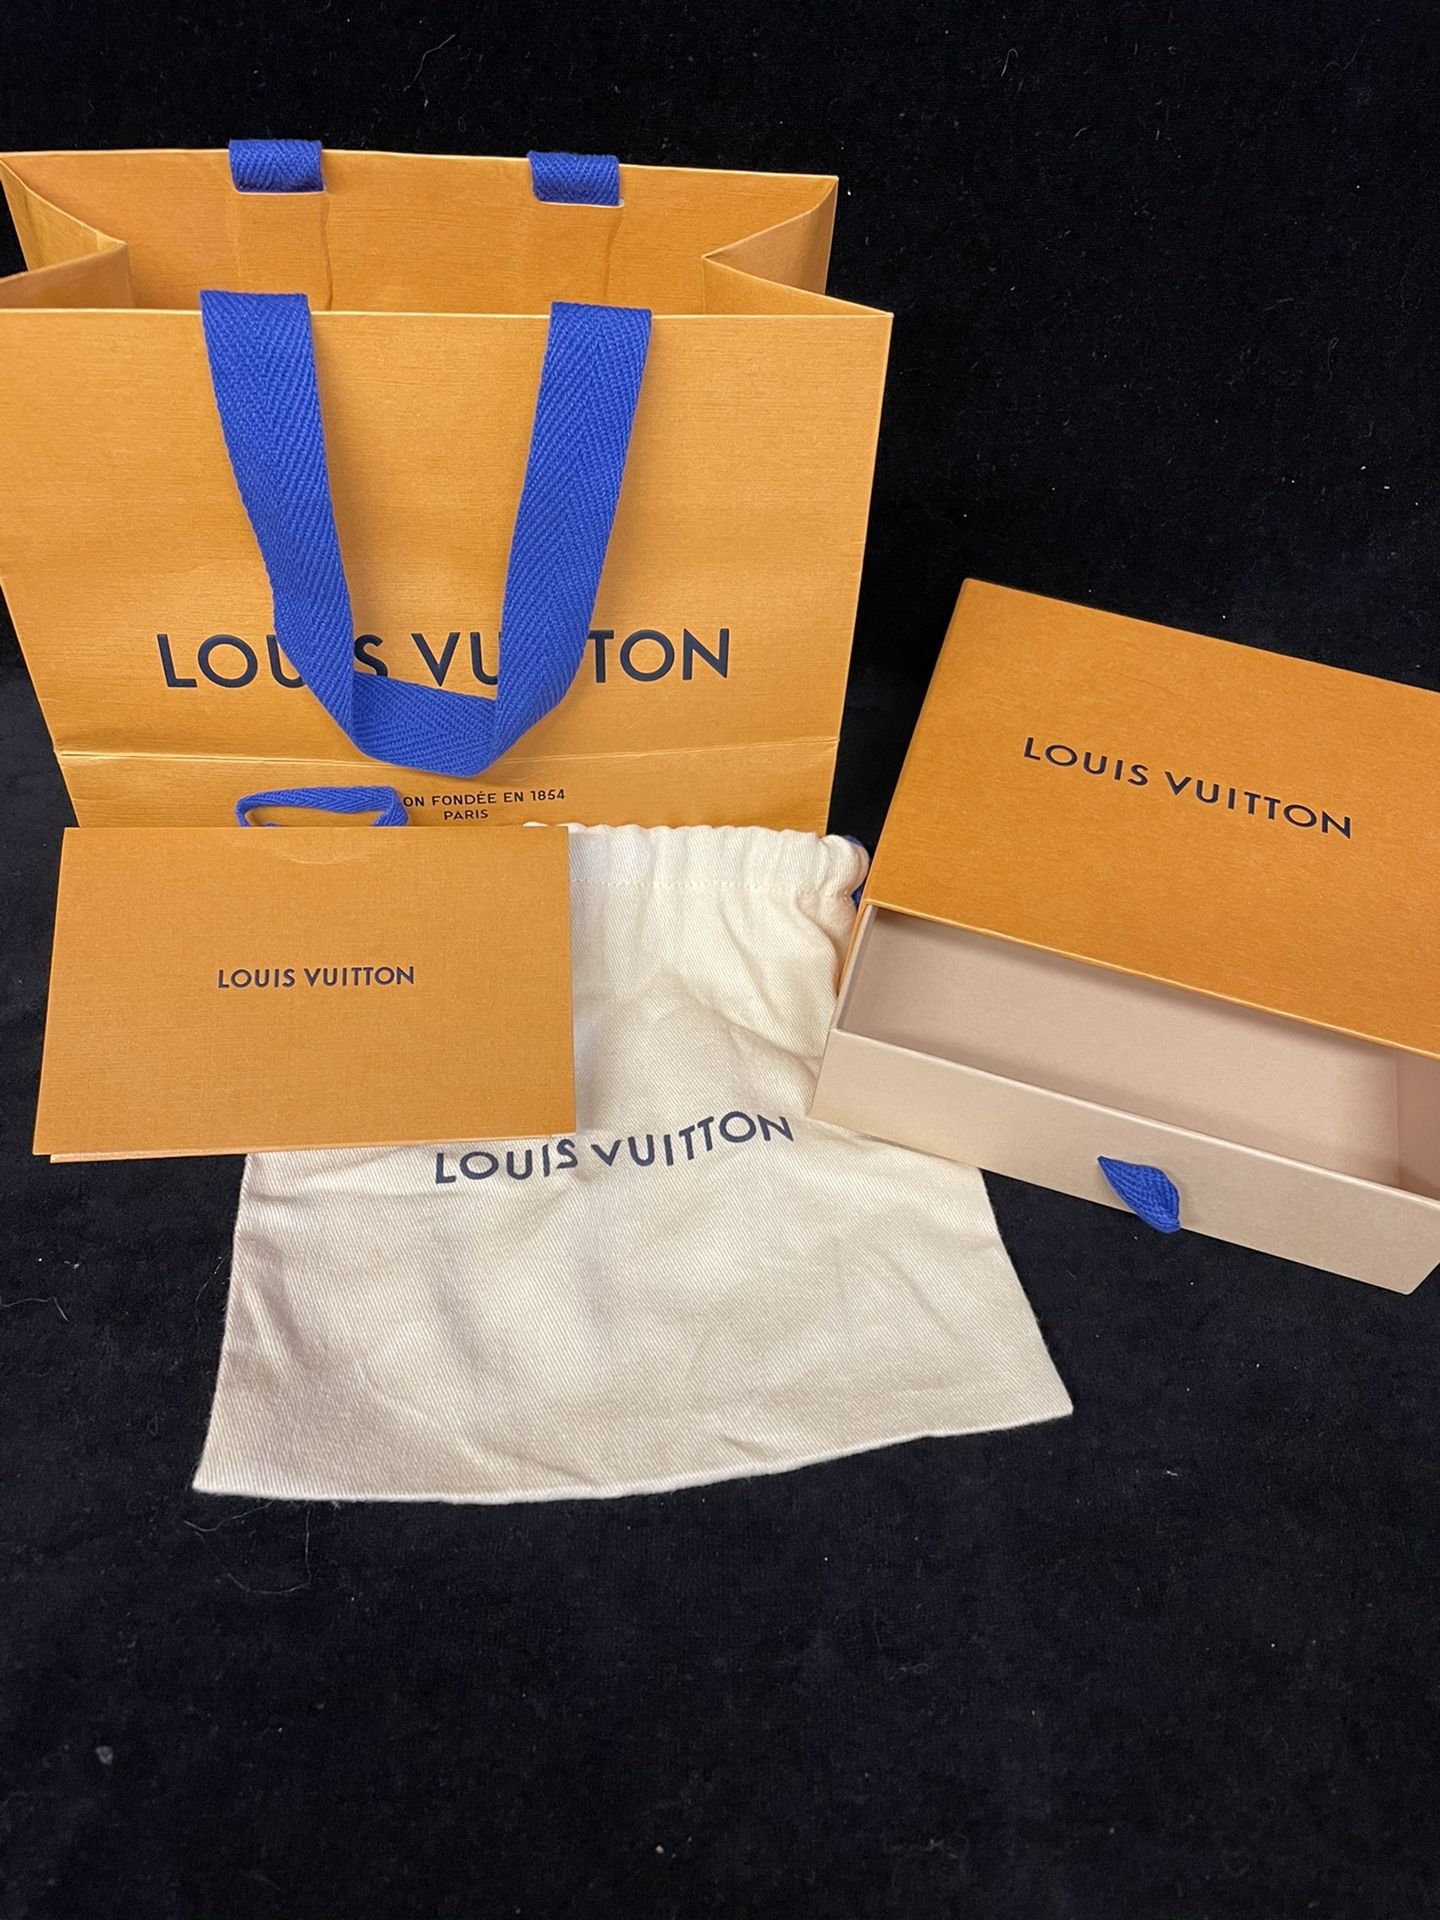 LOUIS VUITTON Empty Gift Box, Card & Bag